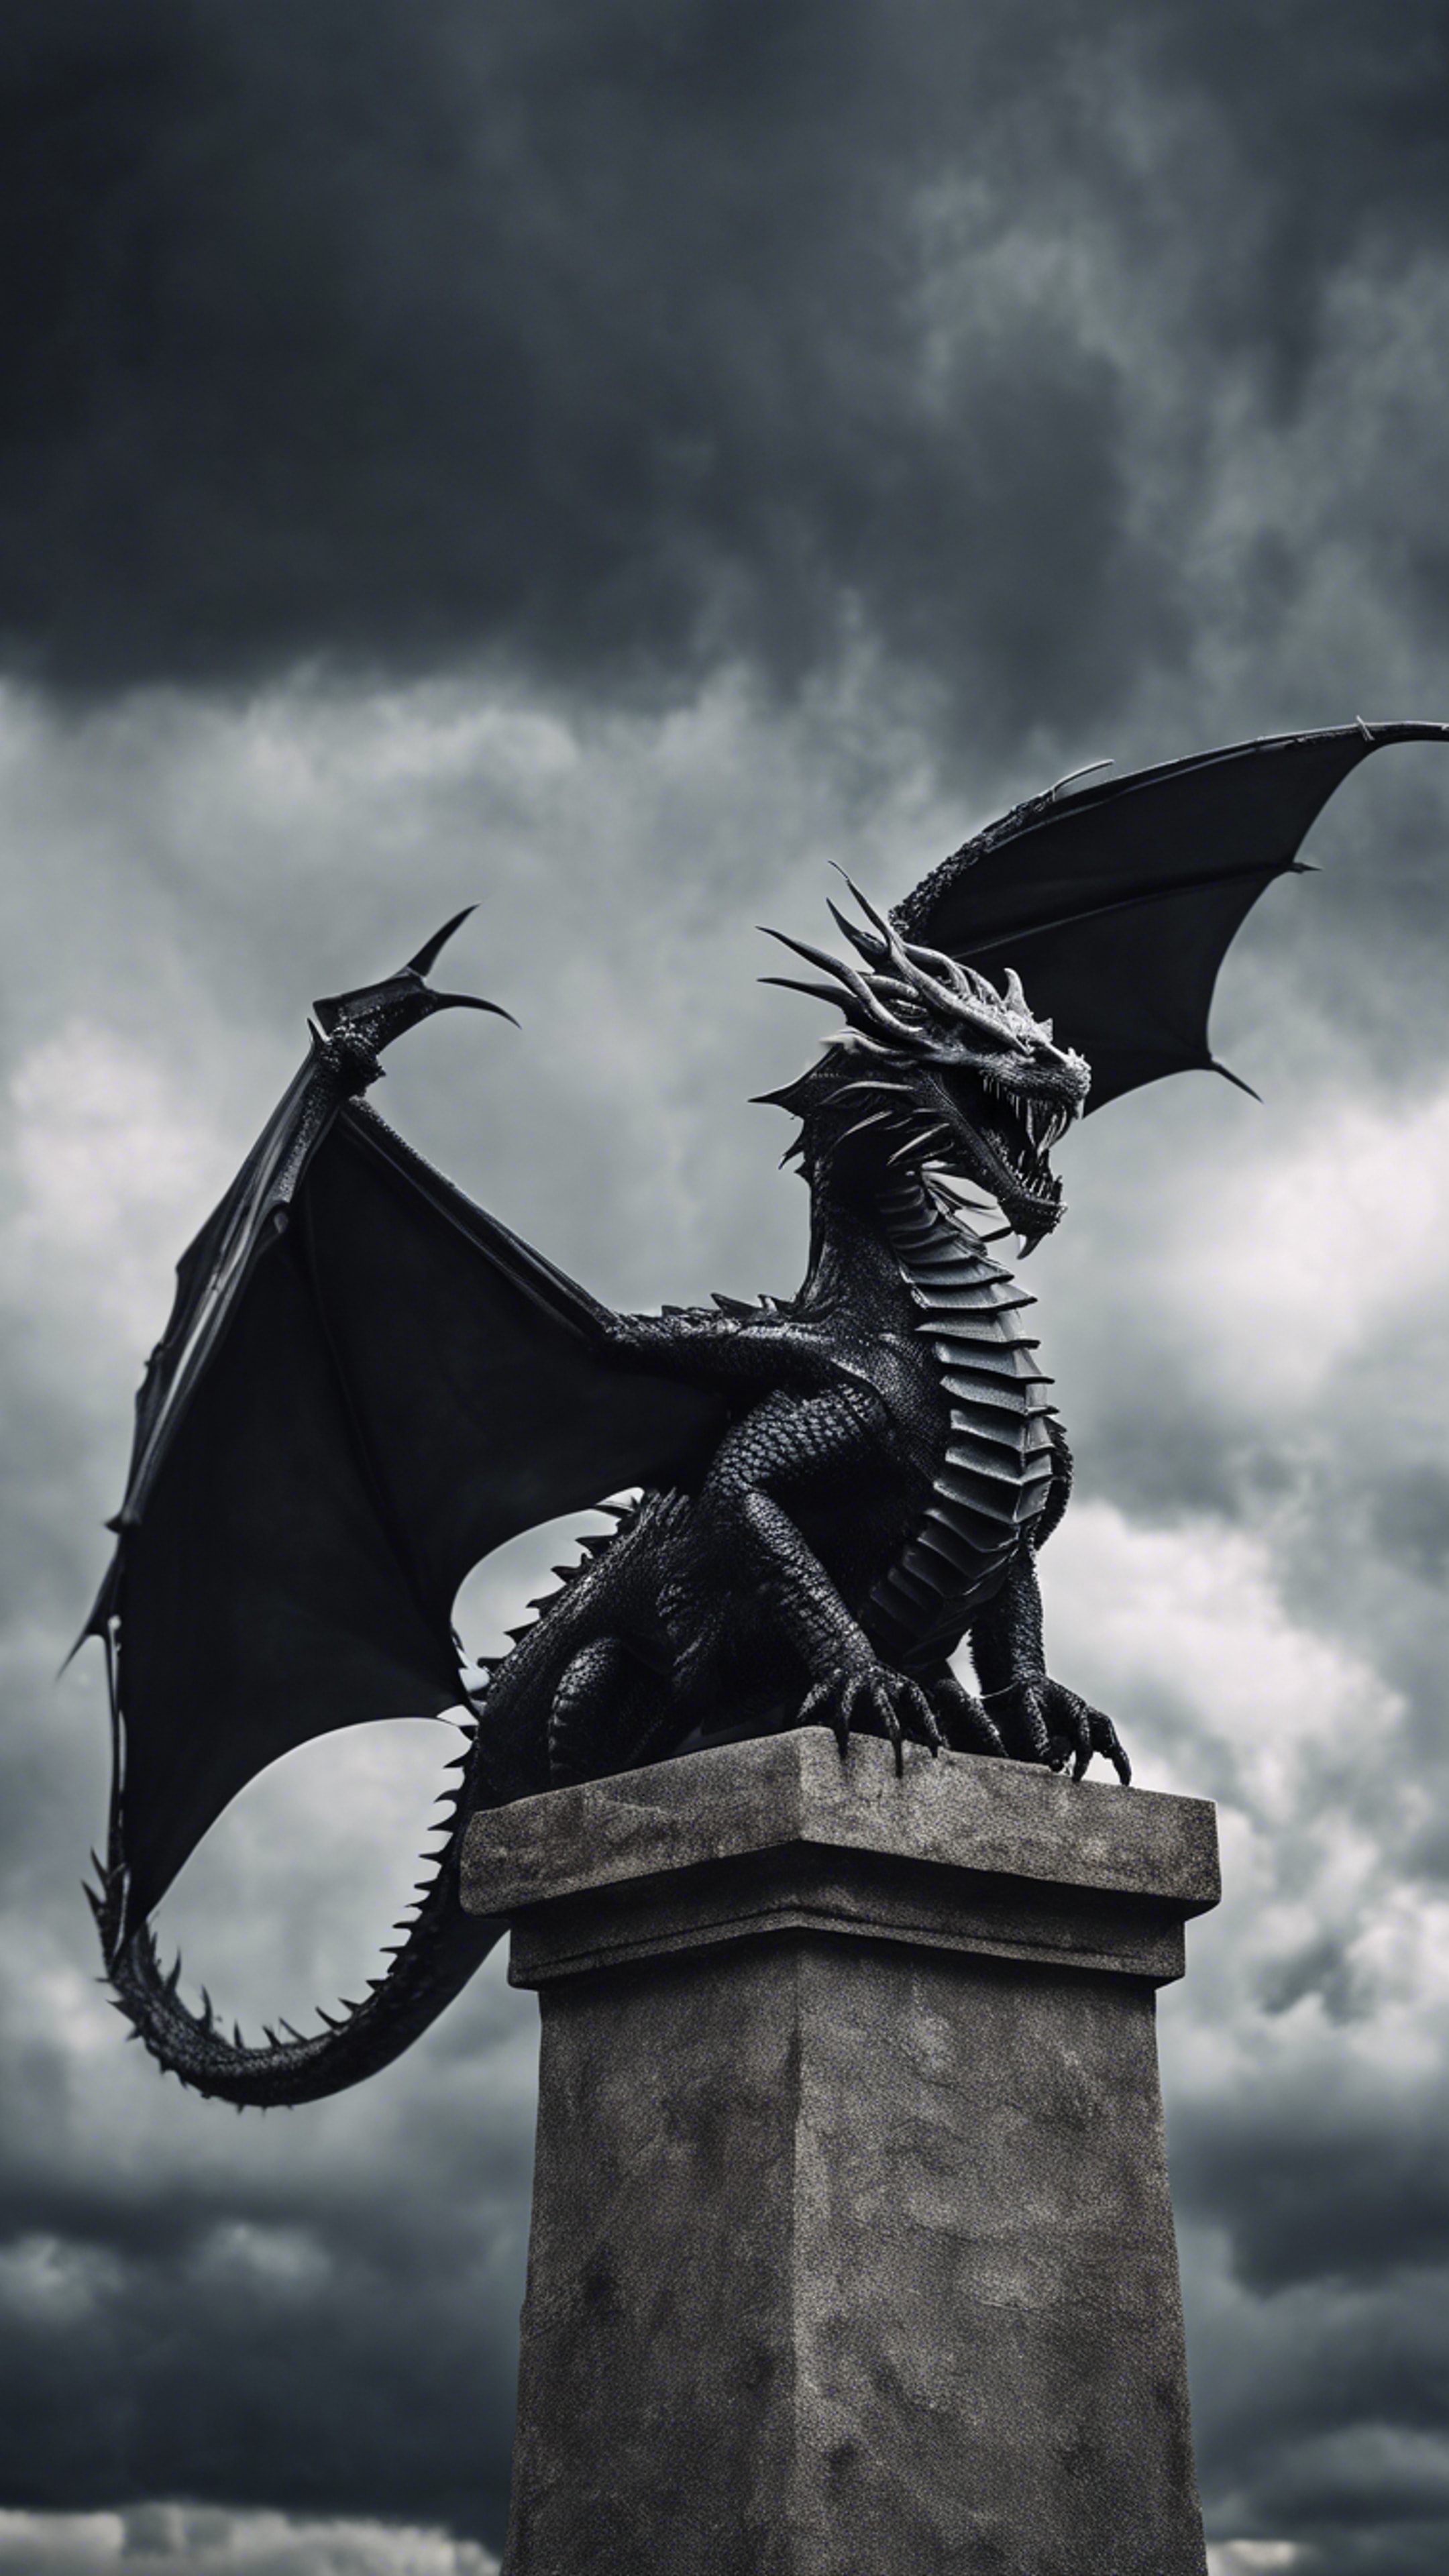 A gothic-style, black iron dragon flying amidst stormy, dark clouds.壁紙[aebeaee8cf654a26baba]